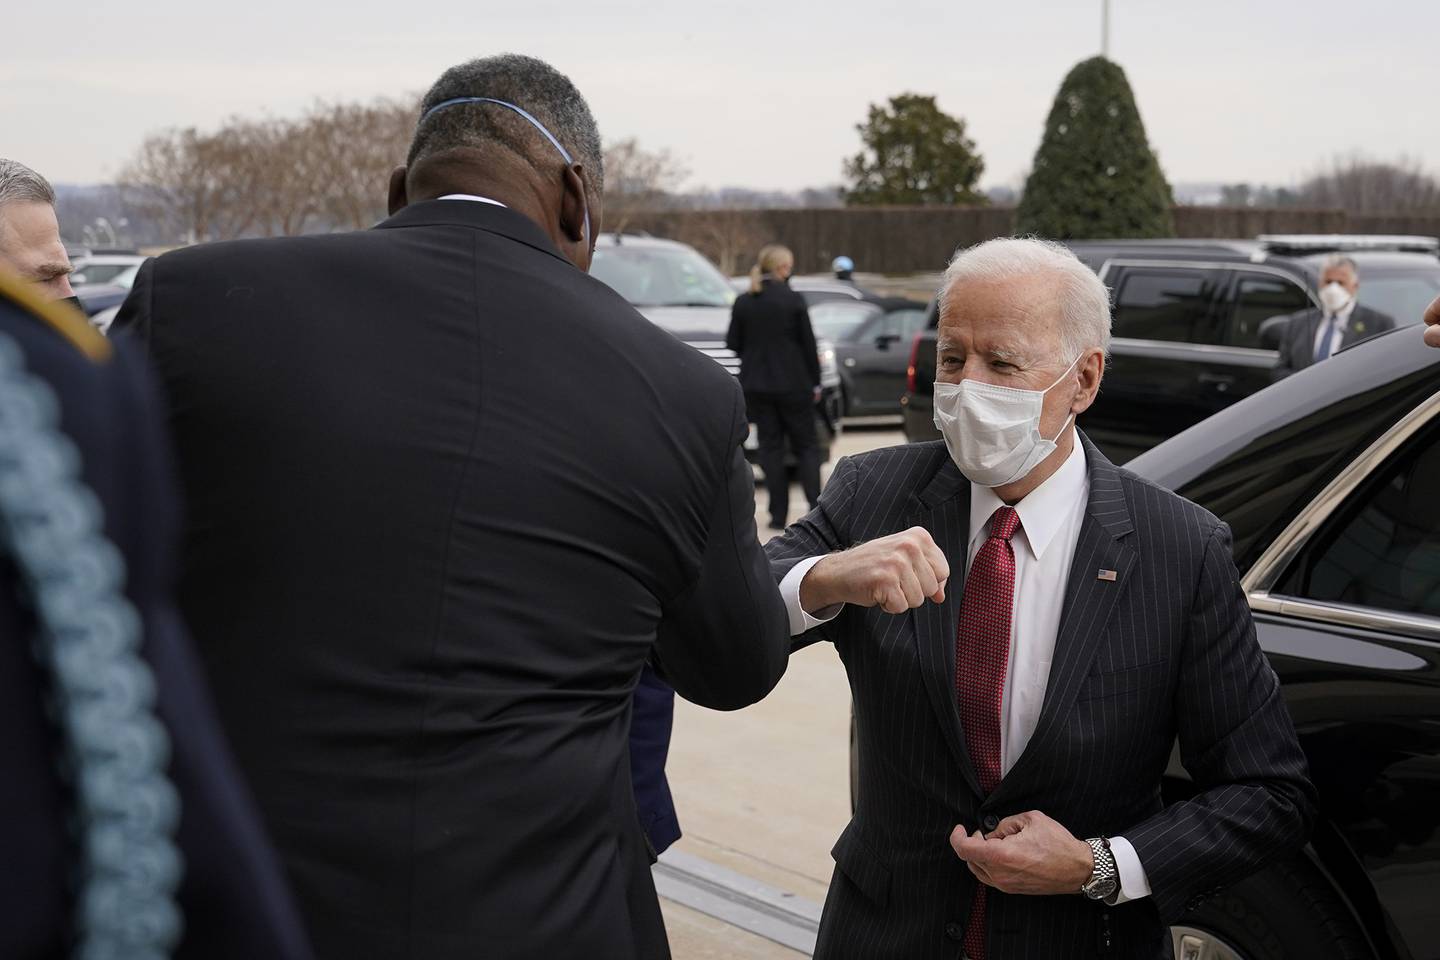 President Joe Biden elbow bumps Defense Secretary Lloyd Austin as he arrives at the Pentagon, Wednesday, Feb. 10, 2021, in Washington.